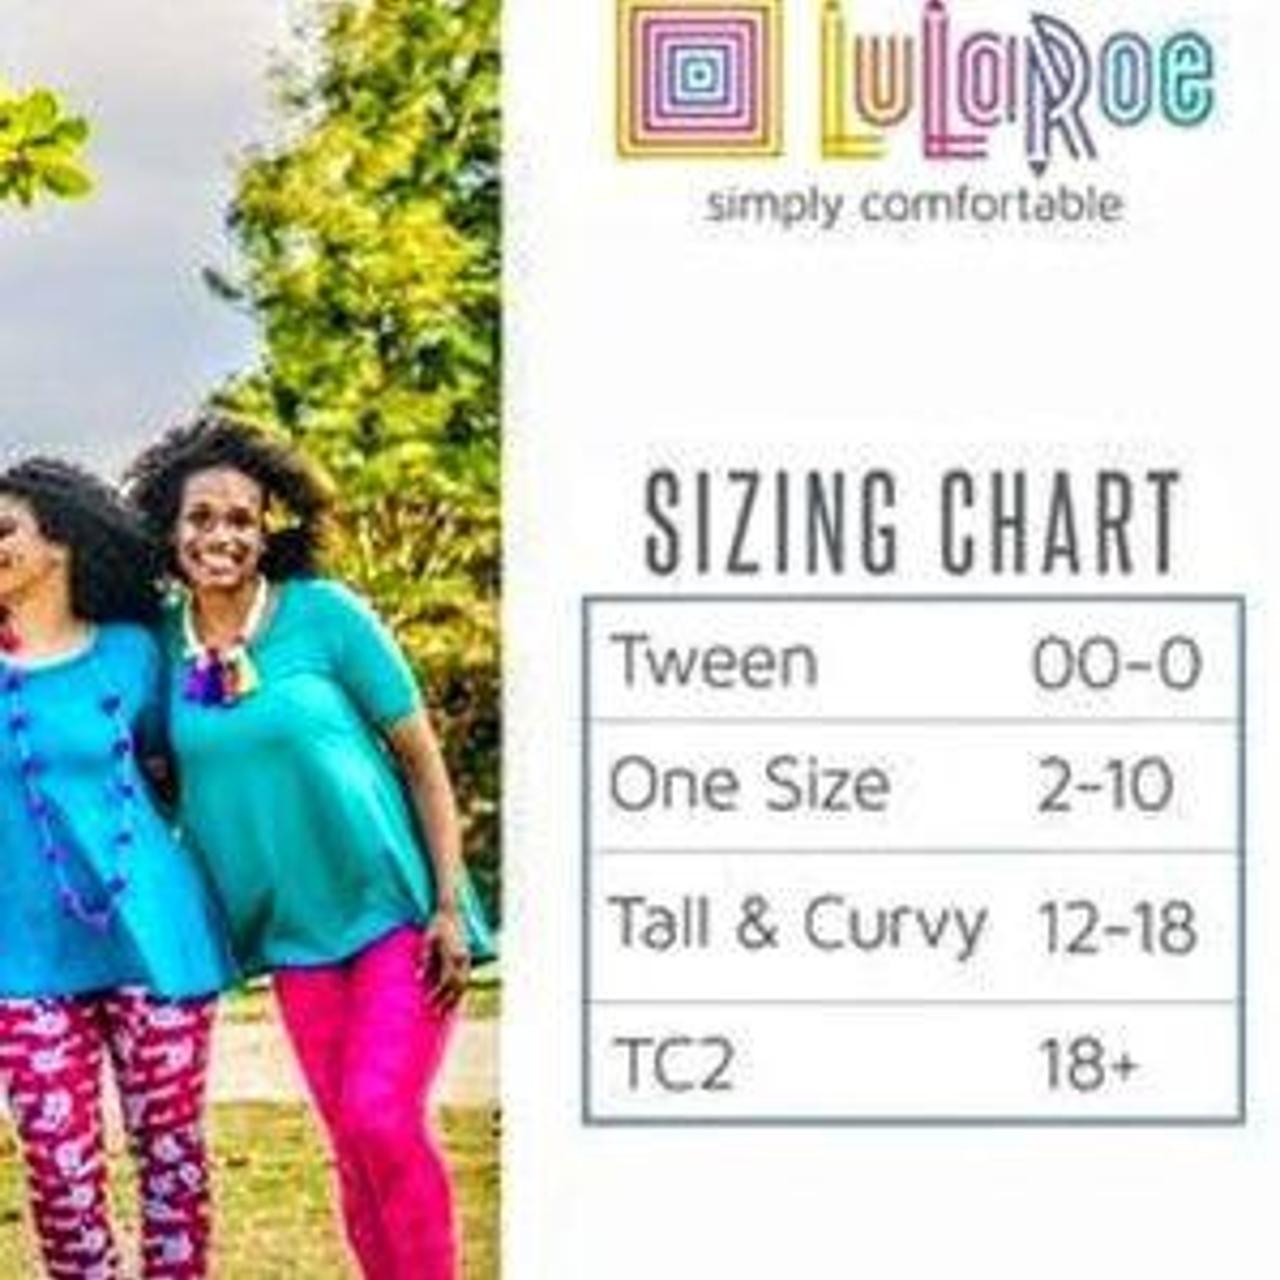 Lularoe leggings - tall & curvy - Depop